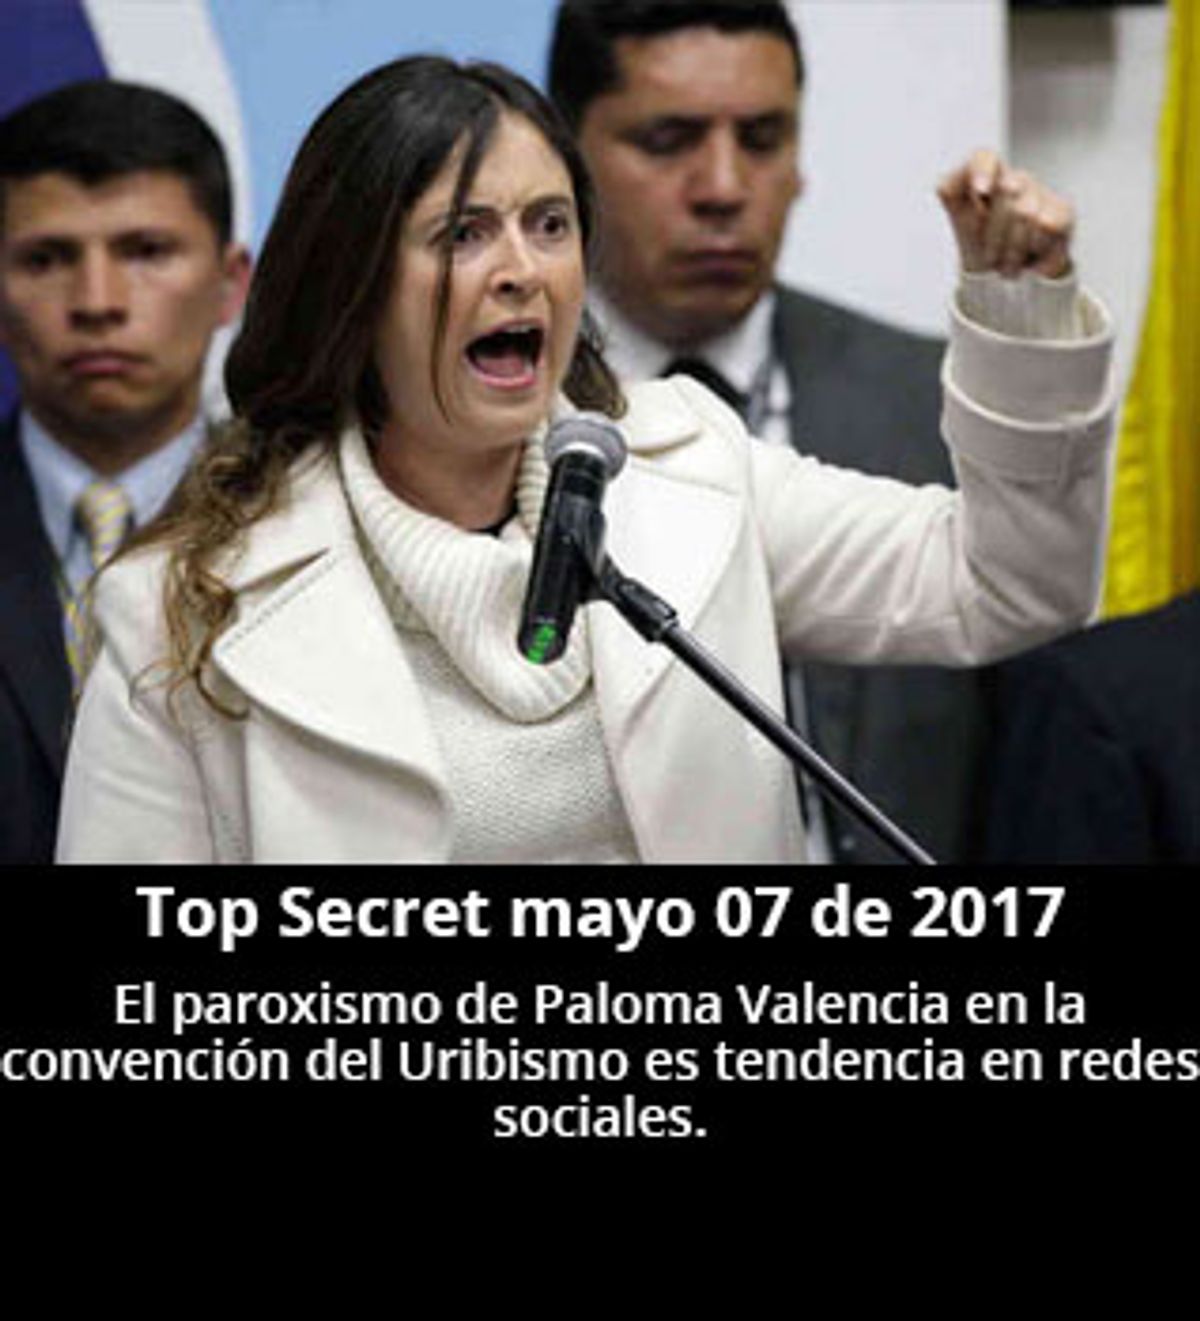 Top Secret mayo 07 de 2017